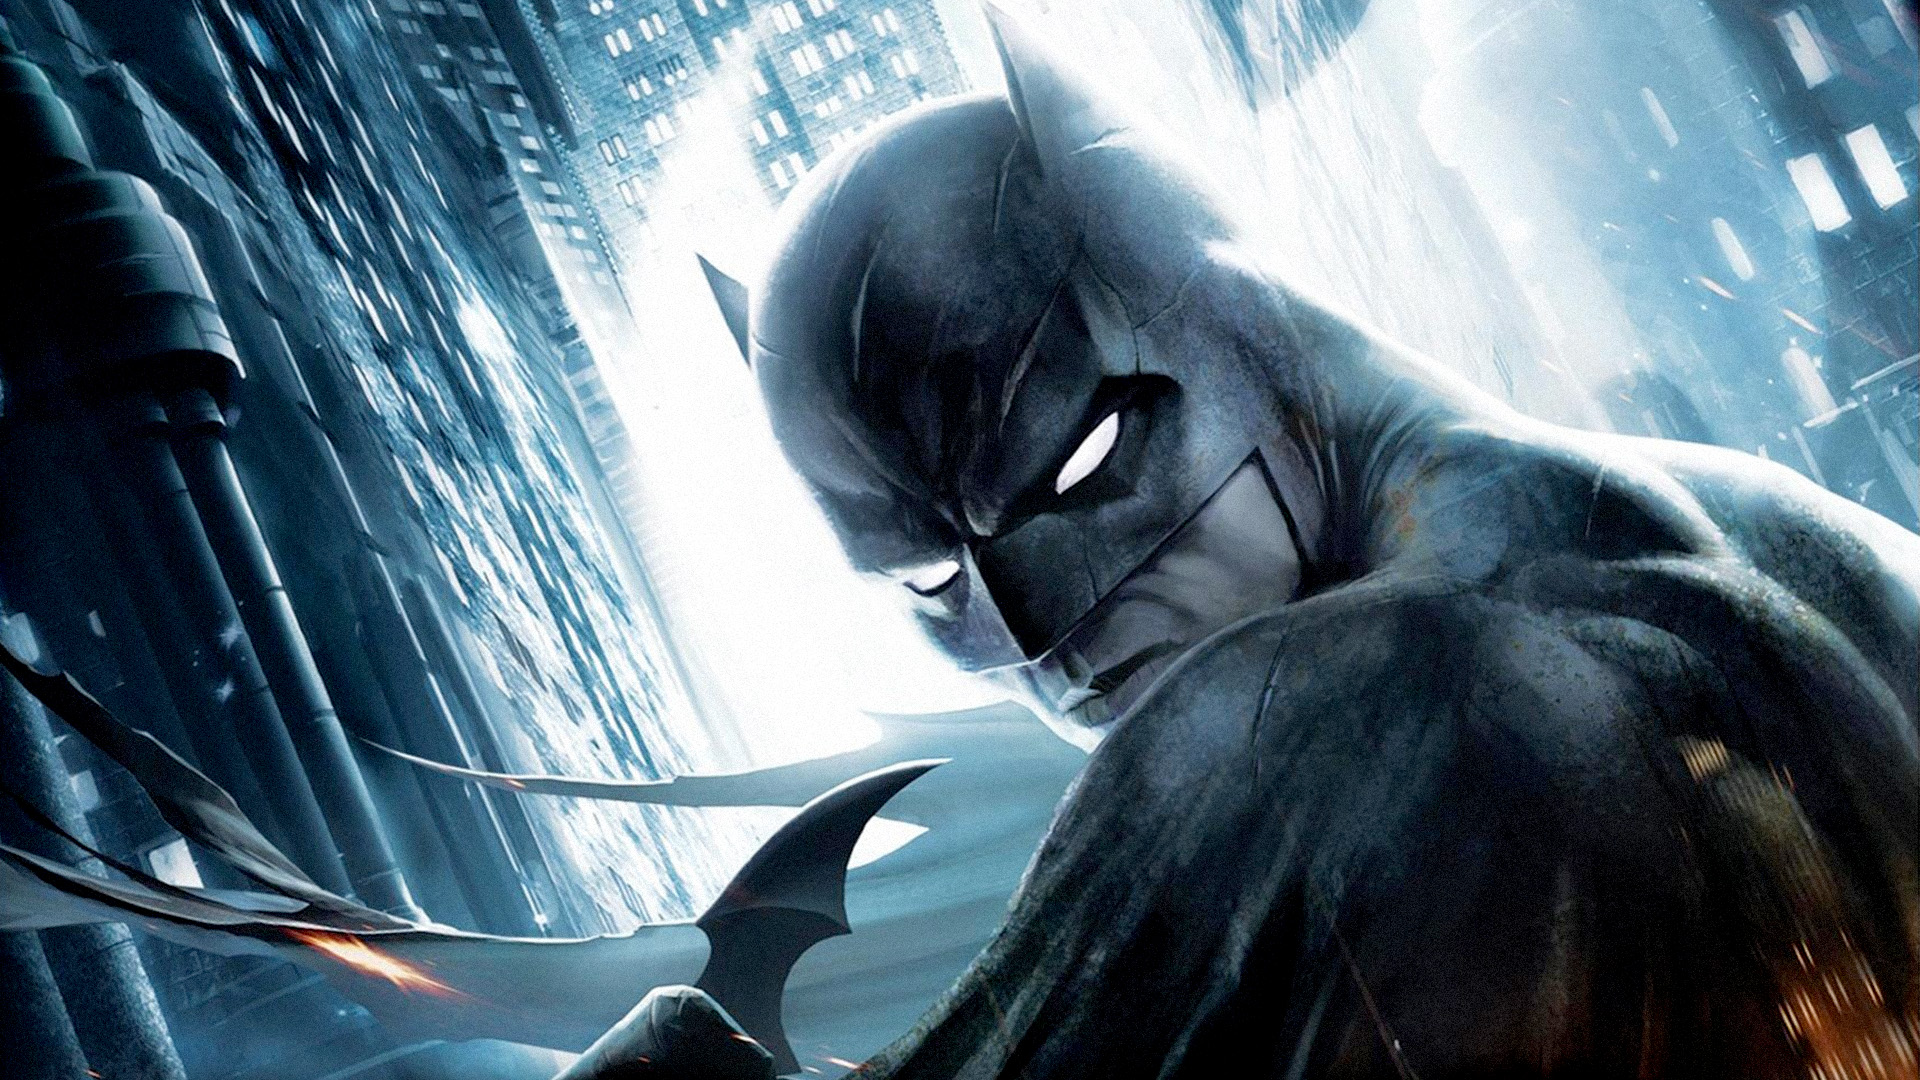 dark knight returns wallpaper,batman,fictional character,cg artwork,superhero,justice league